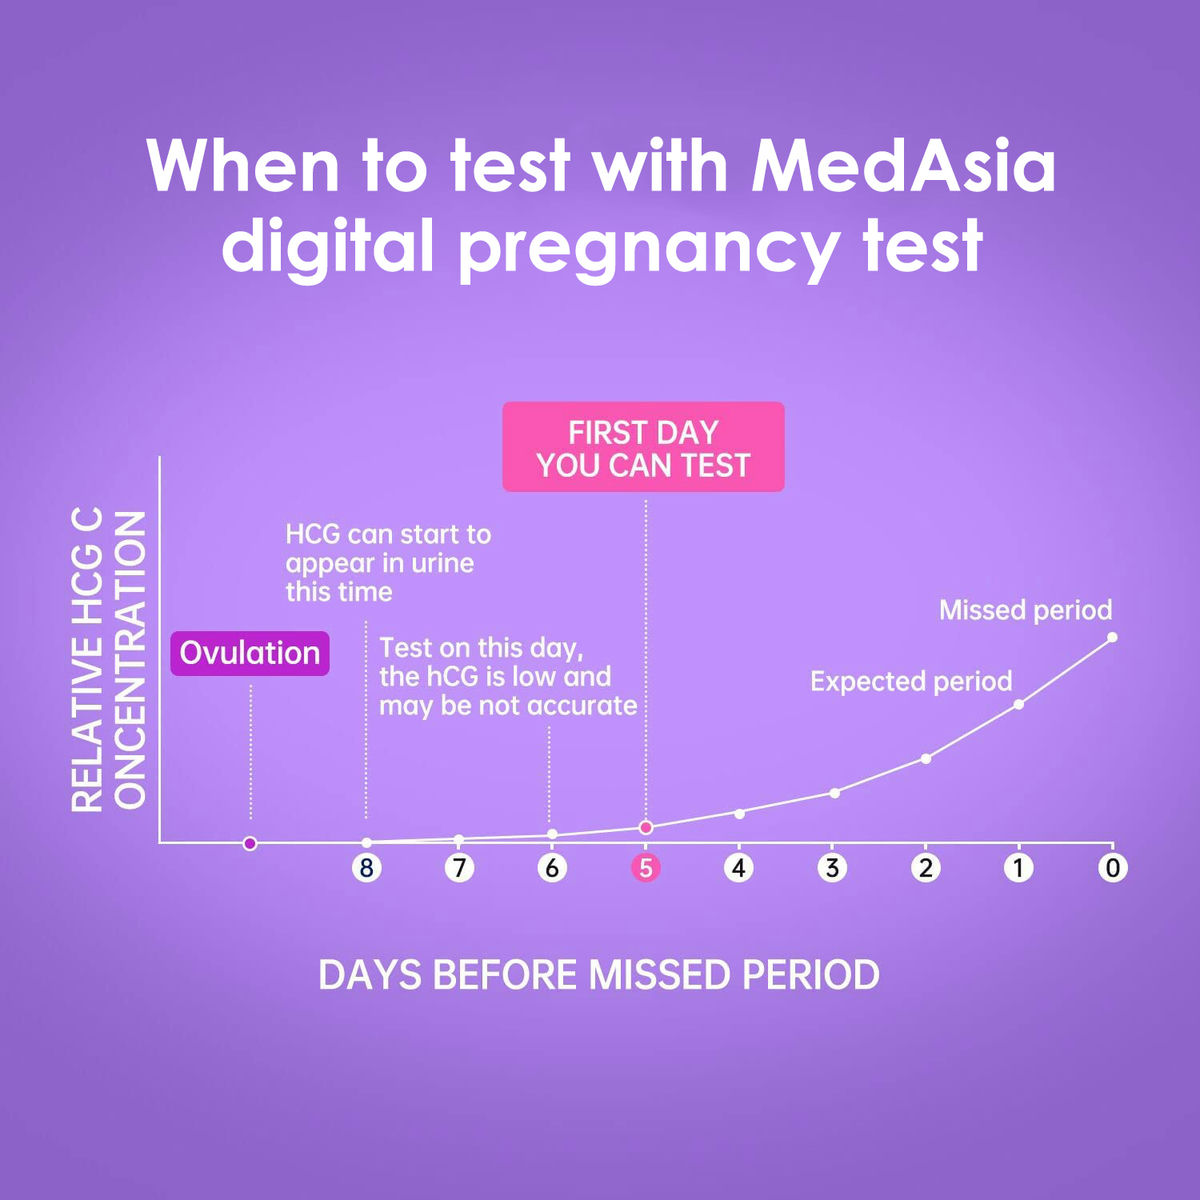 Reusable Dual-Function Digital Pregnancy & Ovulation Test